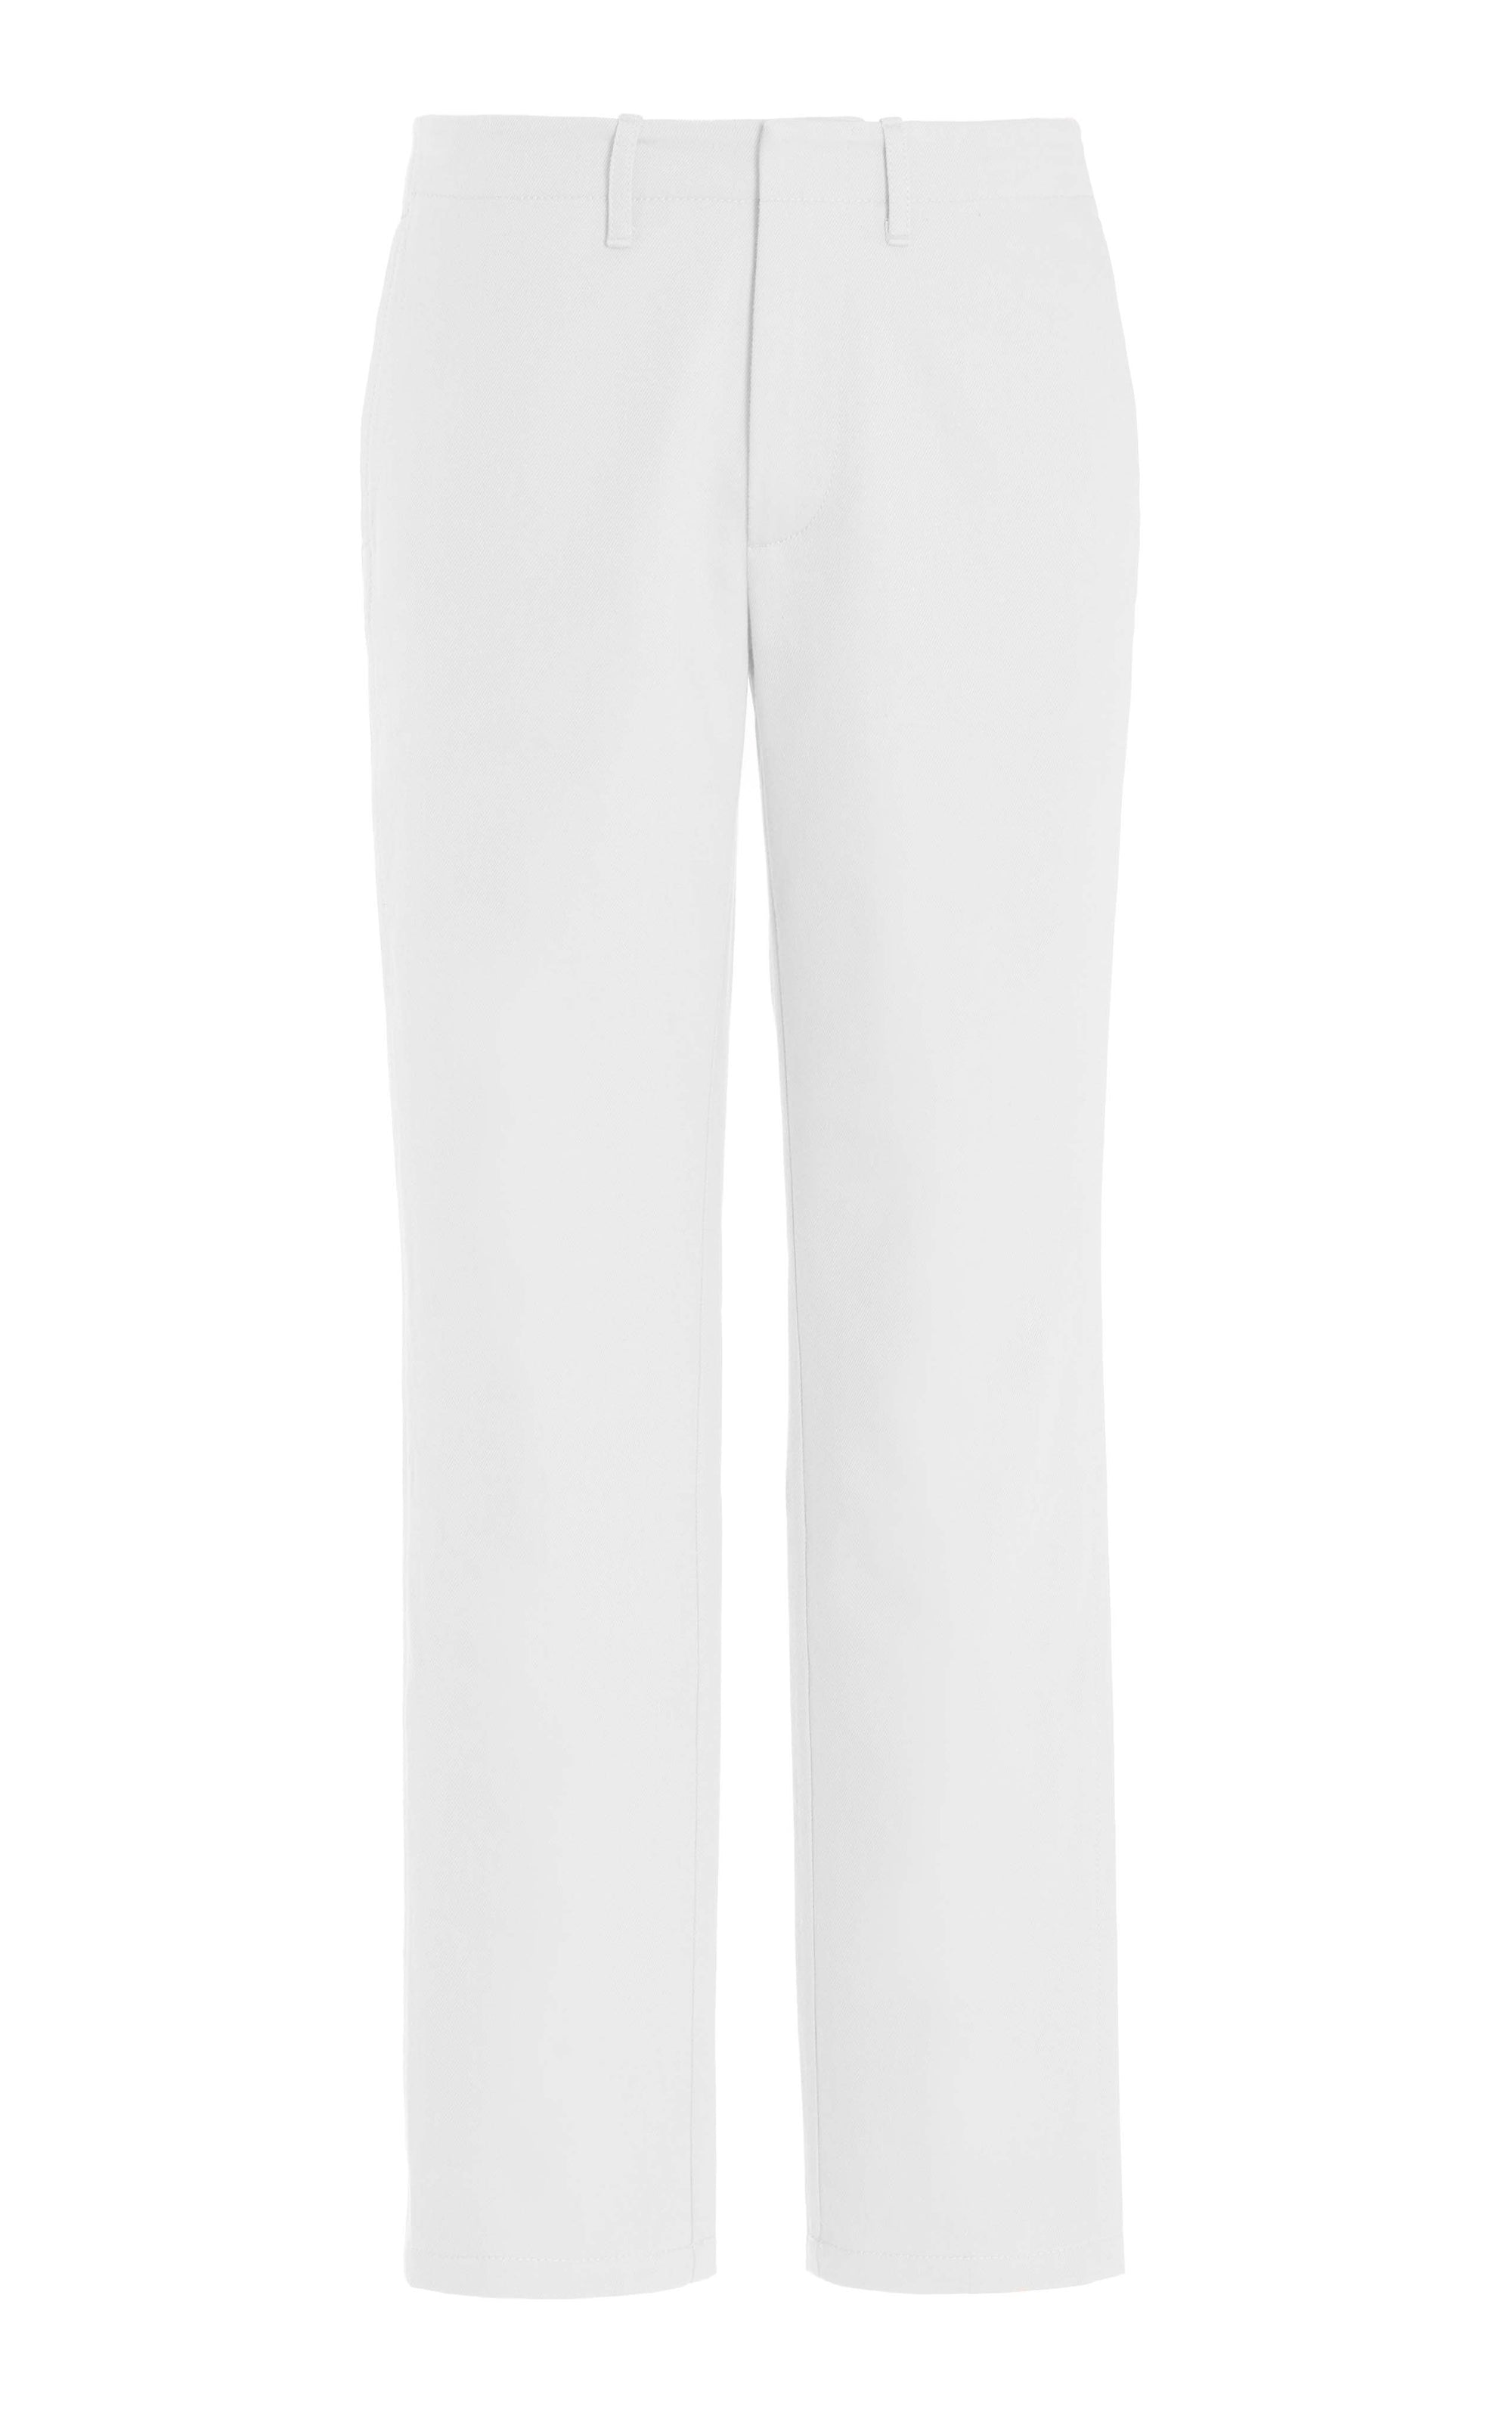 American Sweetheart Womens Size 16 White Solid Capri Pants - Helia Beer Co